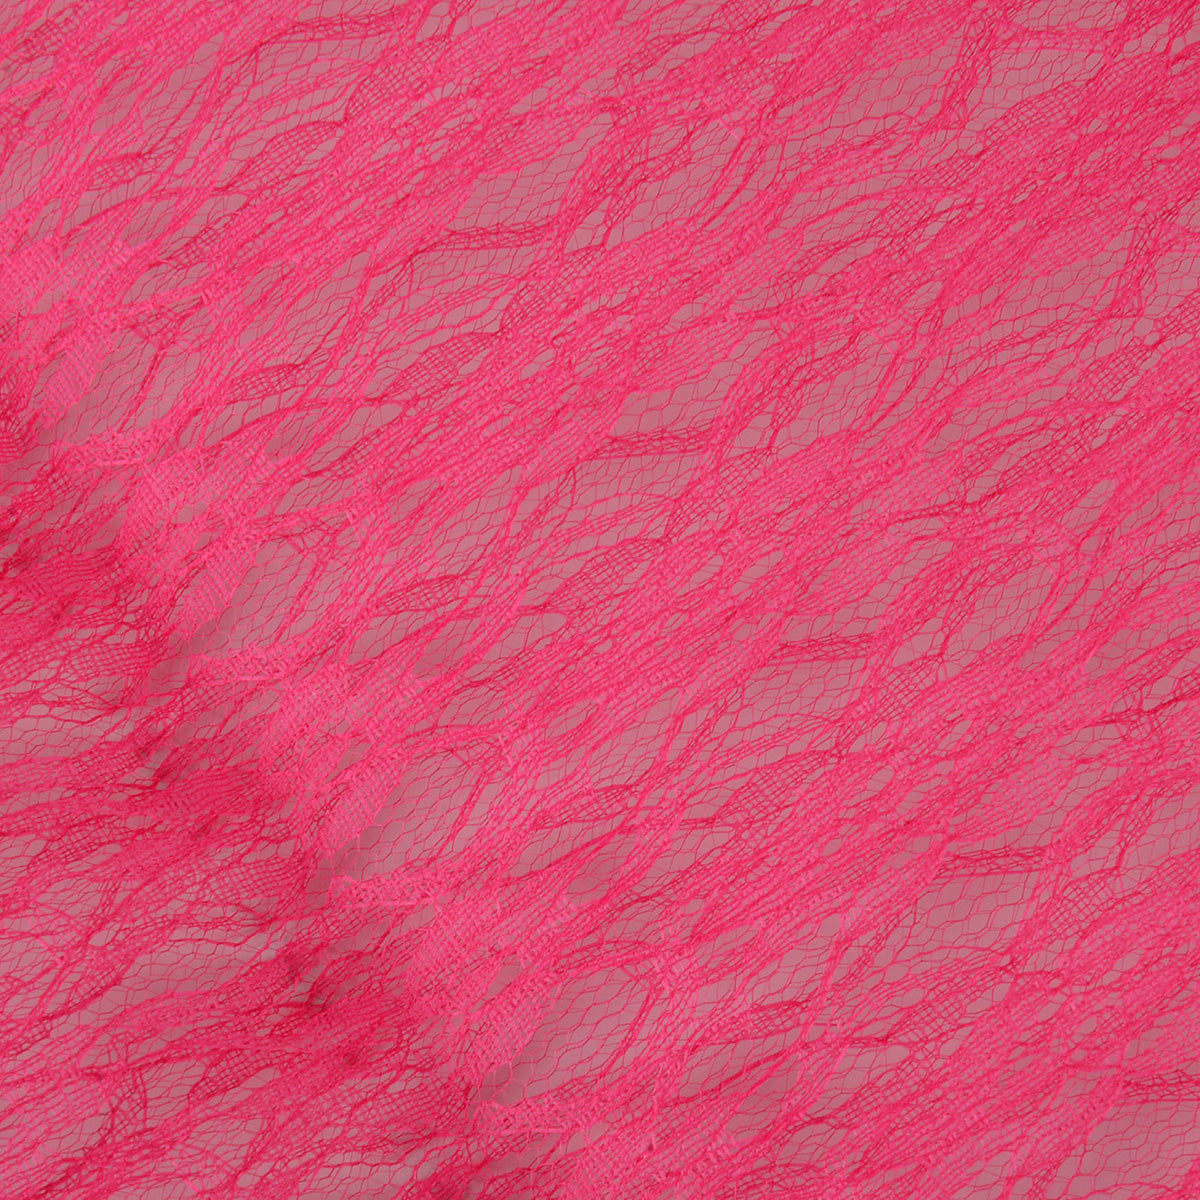 6 Inch Lace Roll - Fuchsia